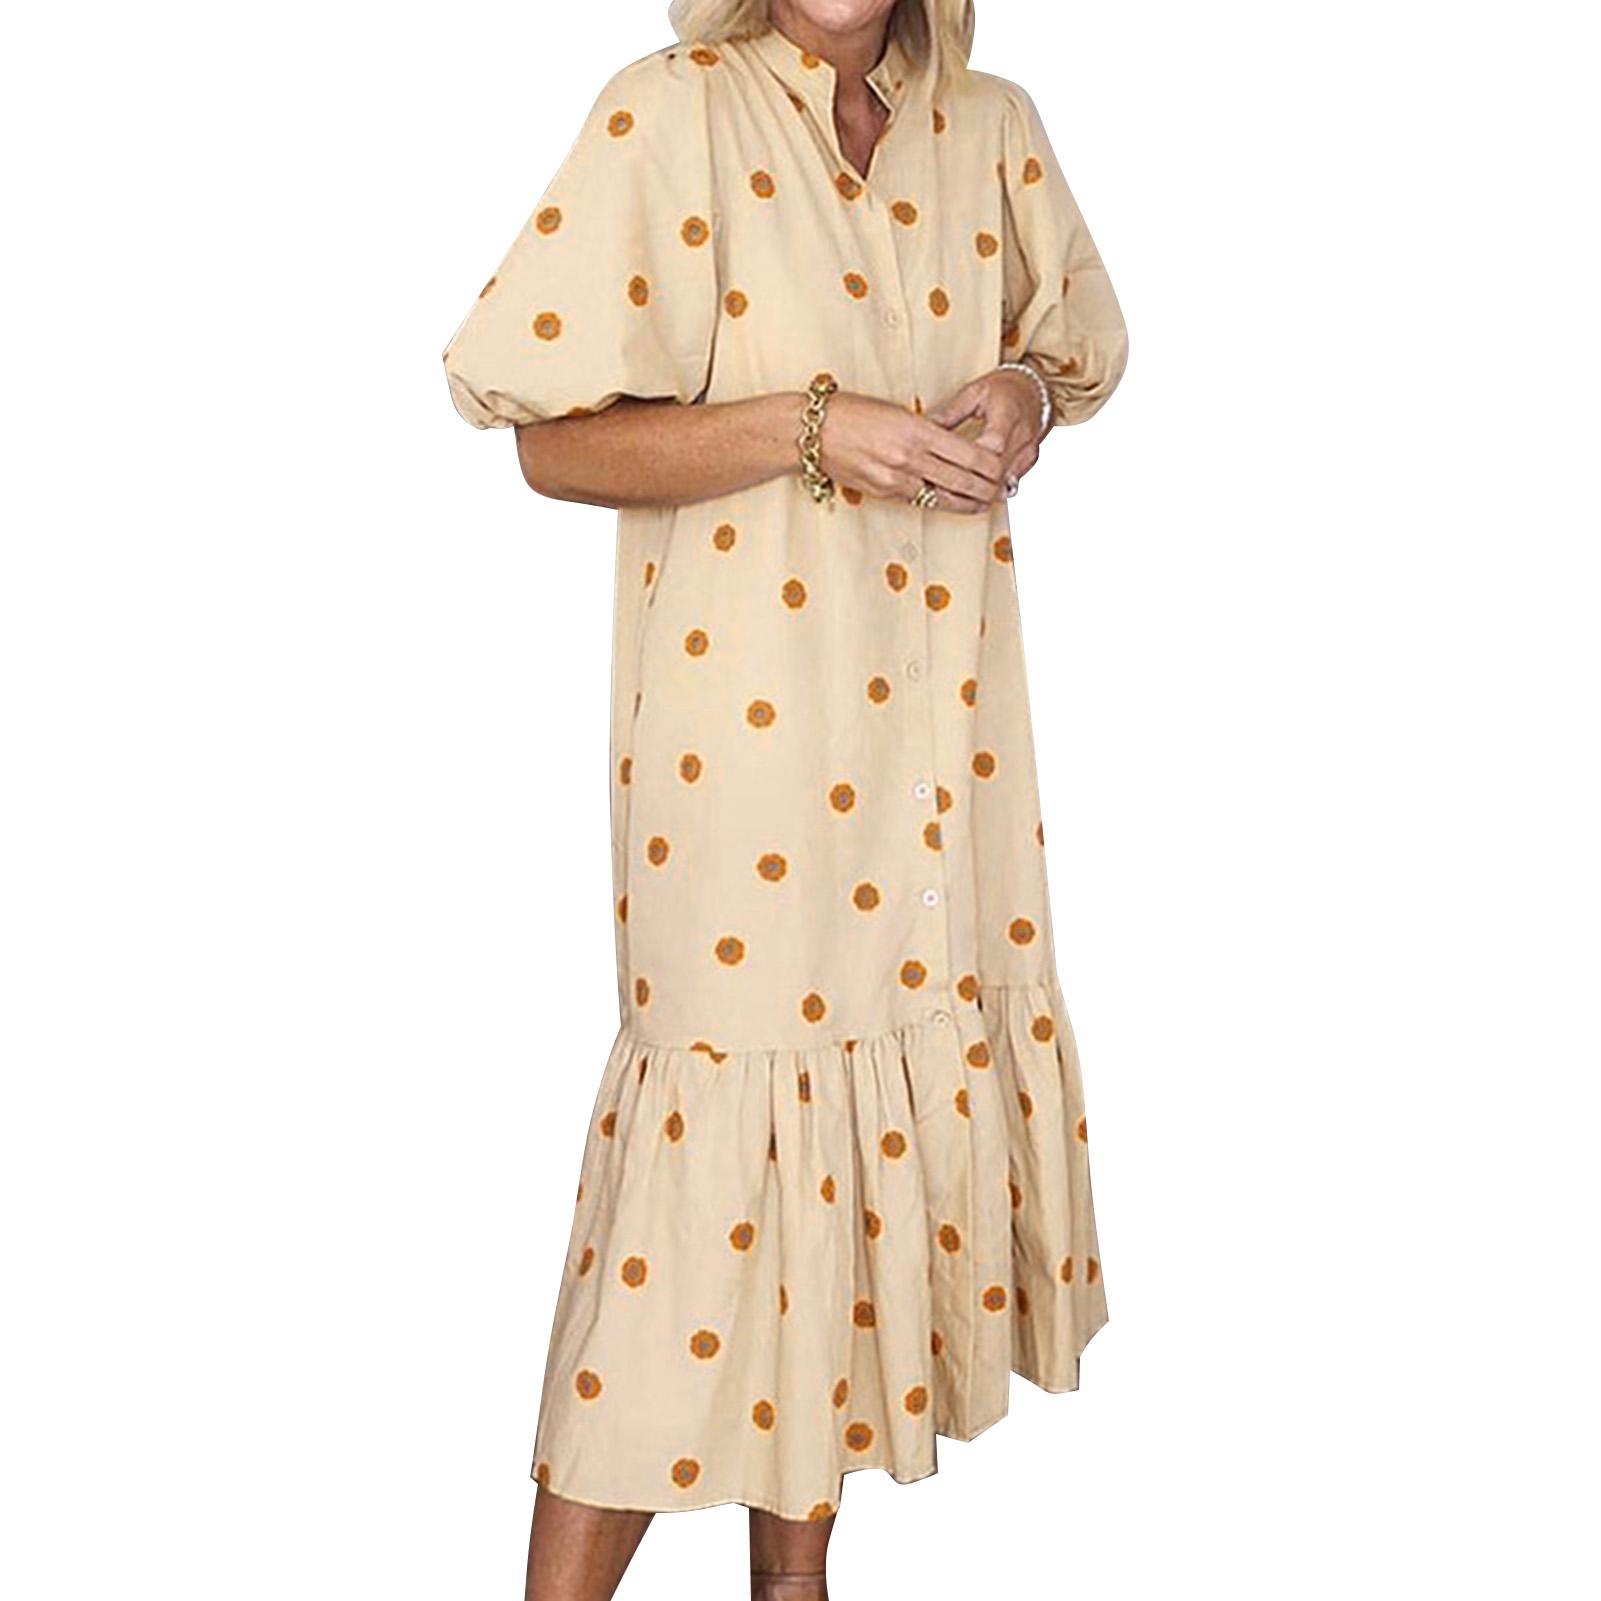 Fashion Women Dress Polka Dot Print Stand Collar Short Sleeve Button Casual Sweet Dress